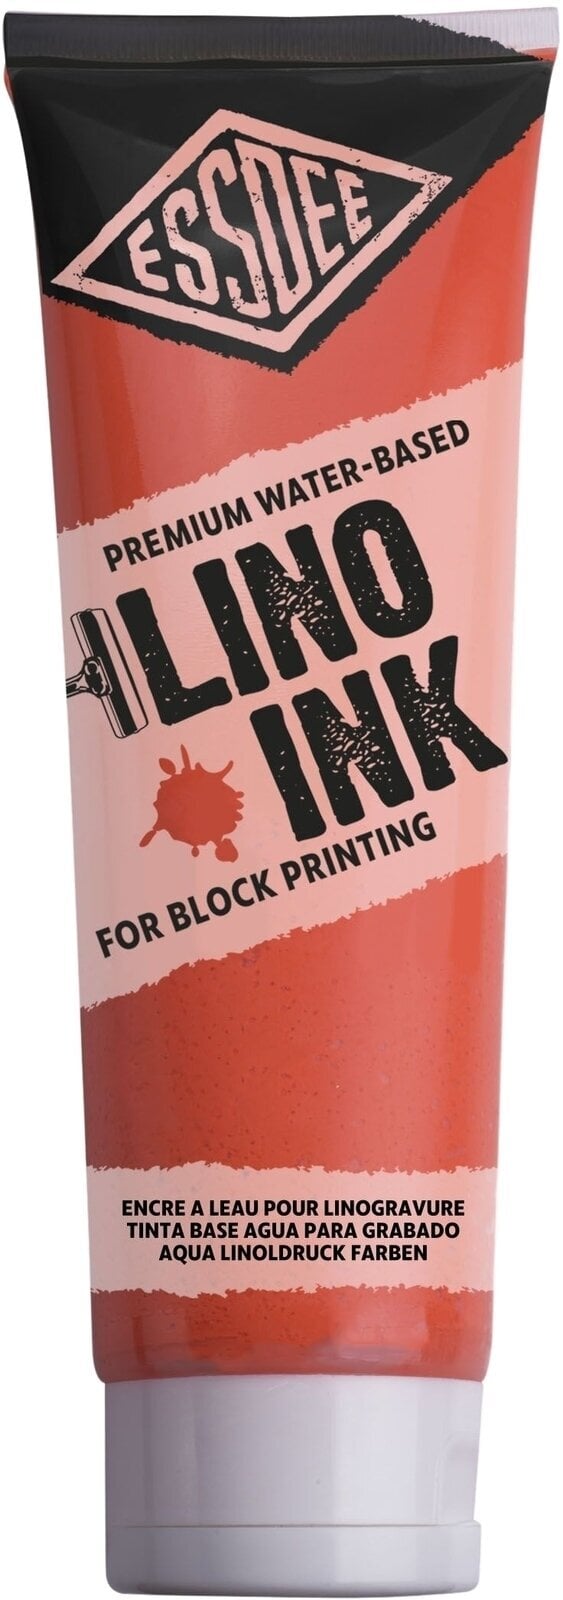 Paint For Linocut Essdee Block Printing Ink Paint For Linocut Fluorescent Orange 300 ml